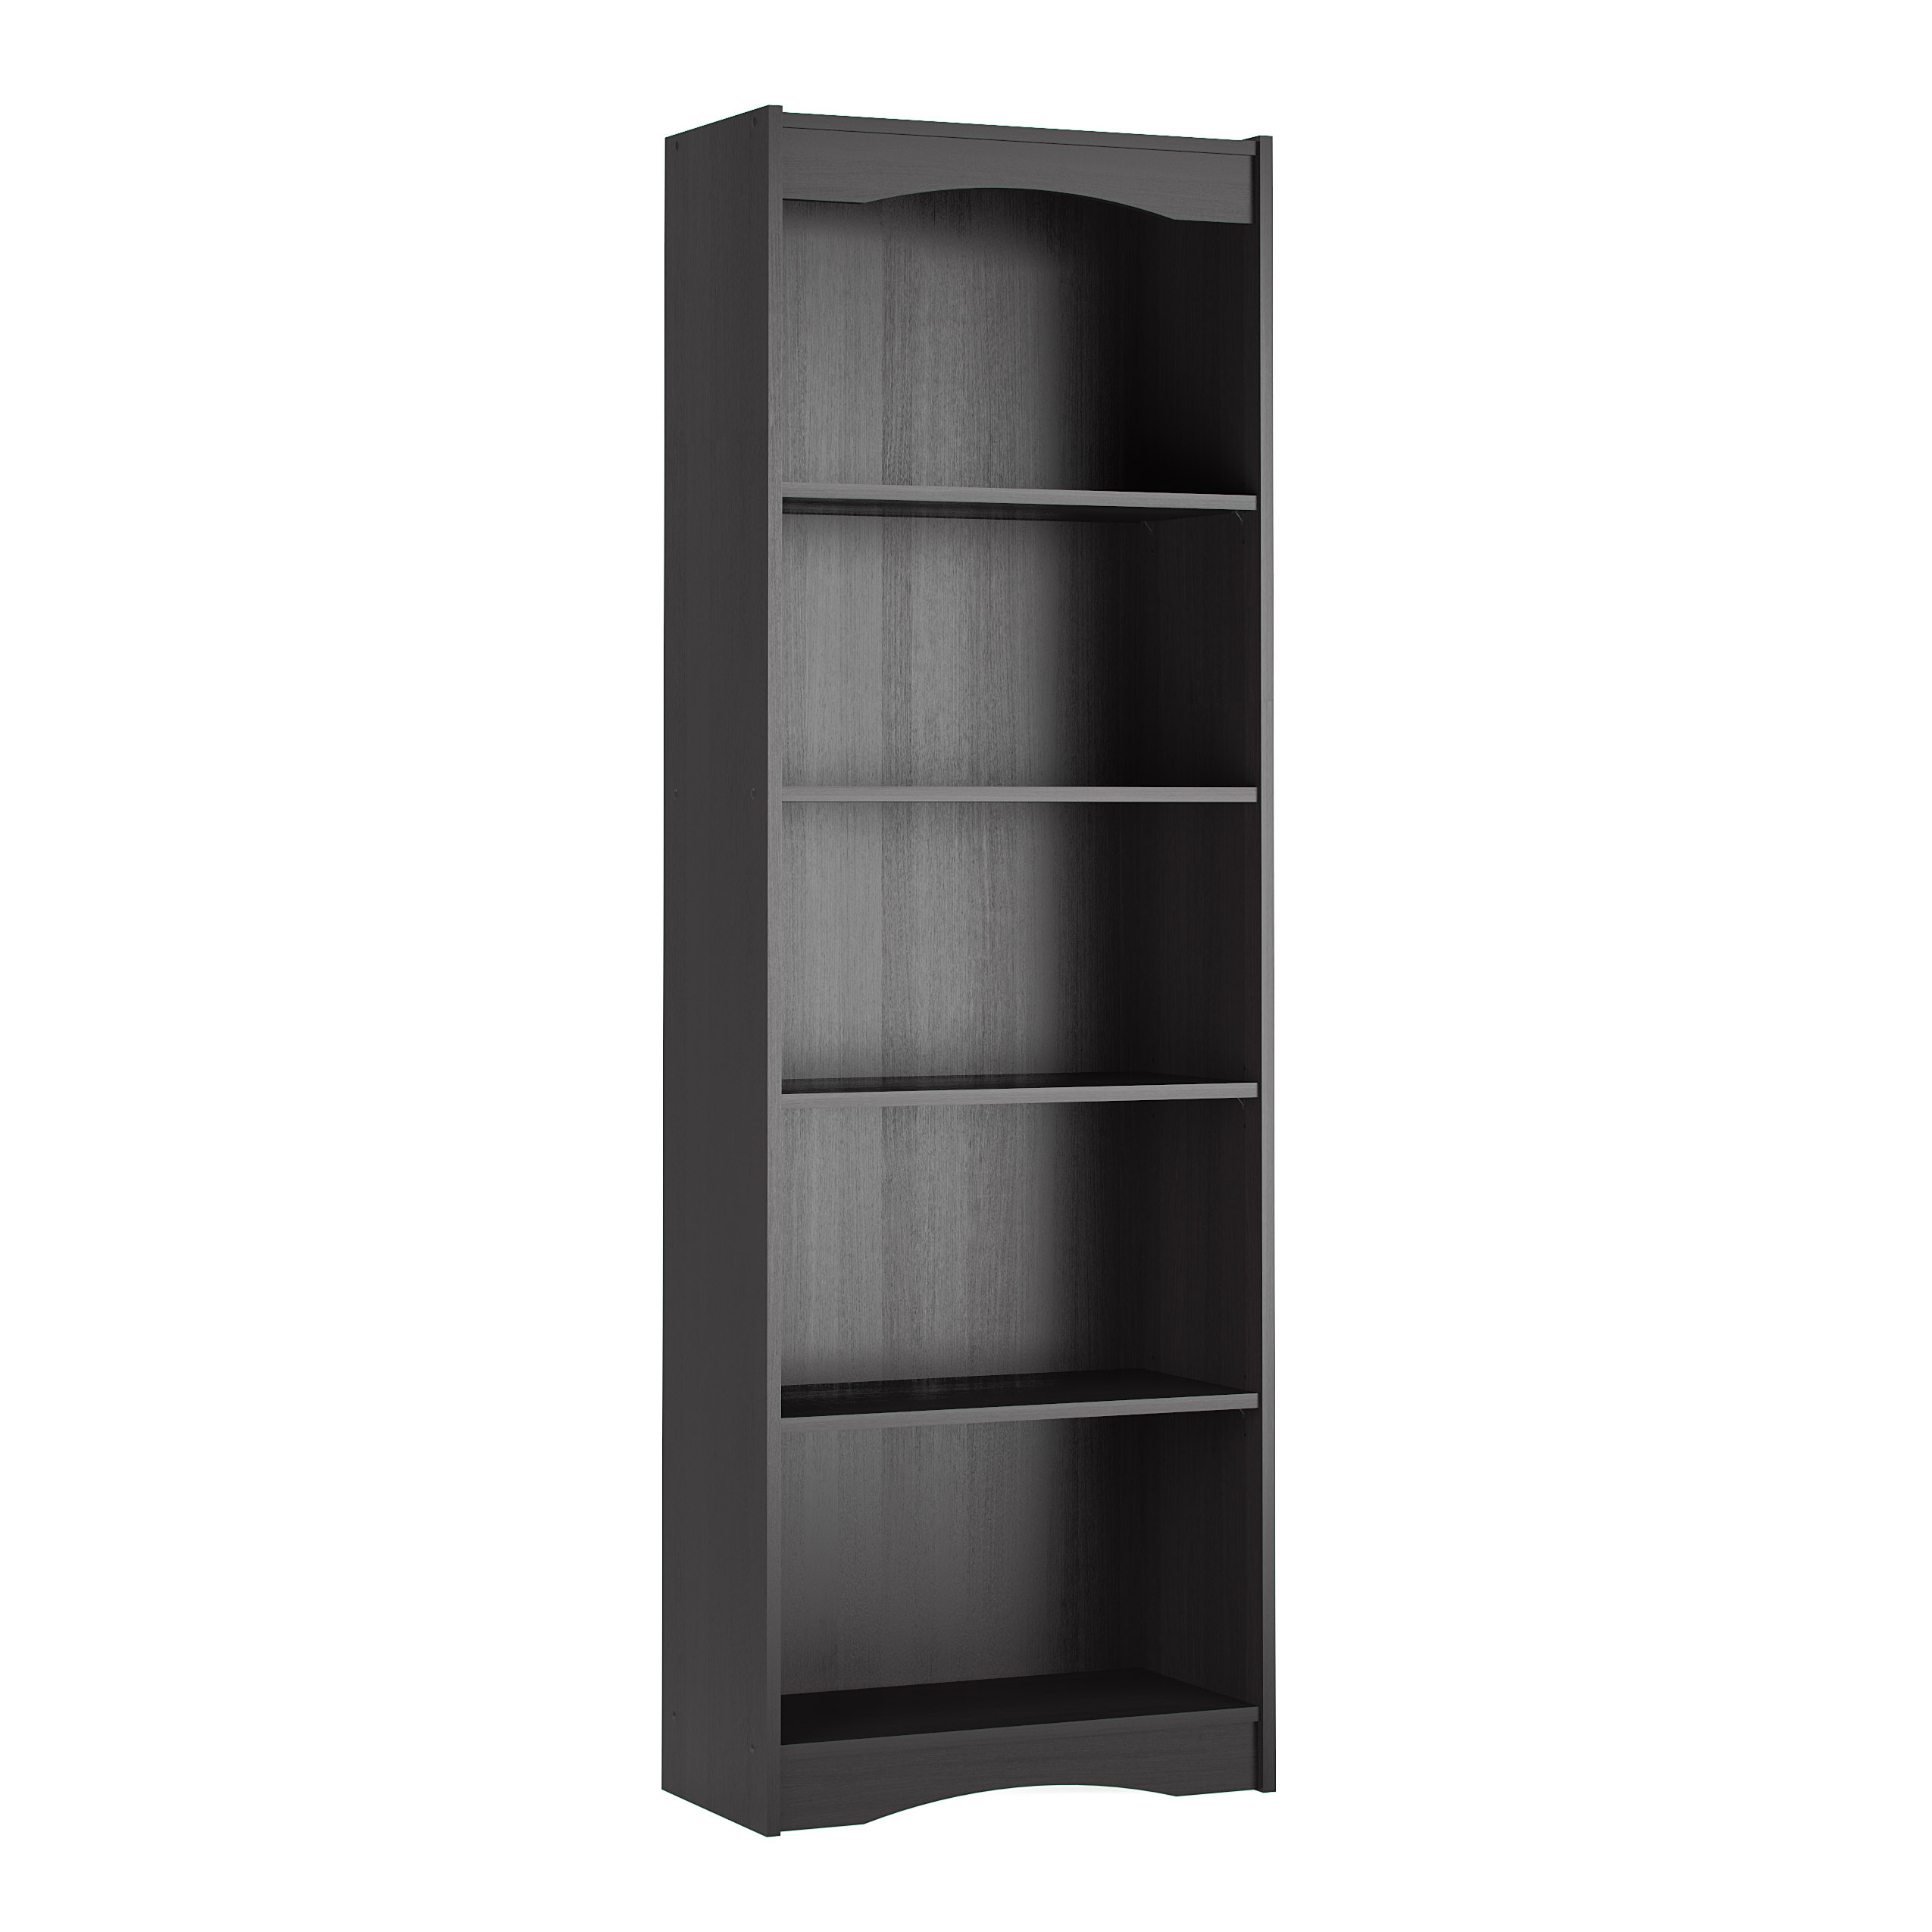 Hawthorn 72 Tall Adjustable Bookcase Walmart in sizing 2550 X 2550